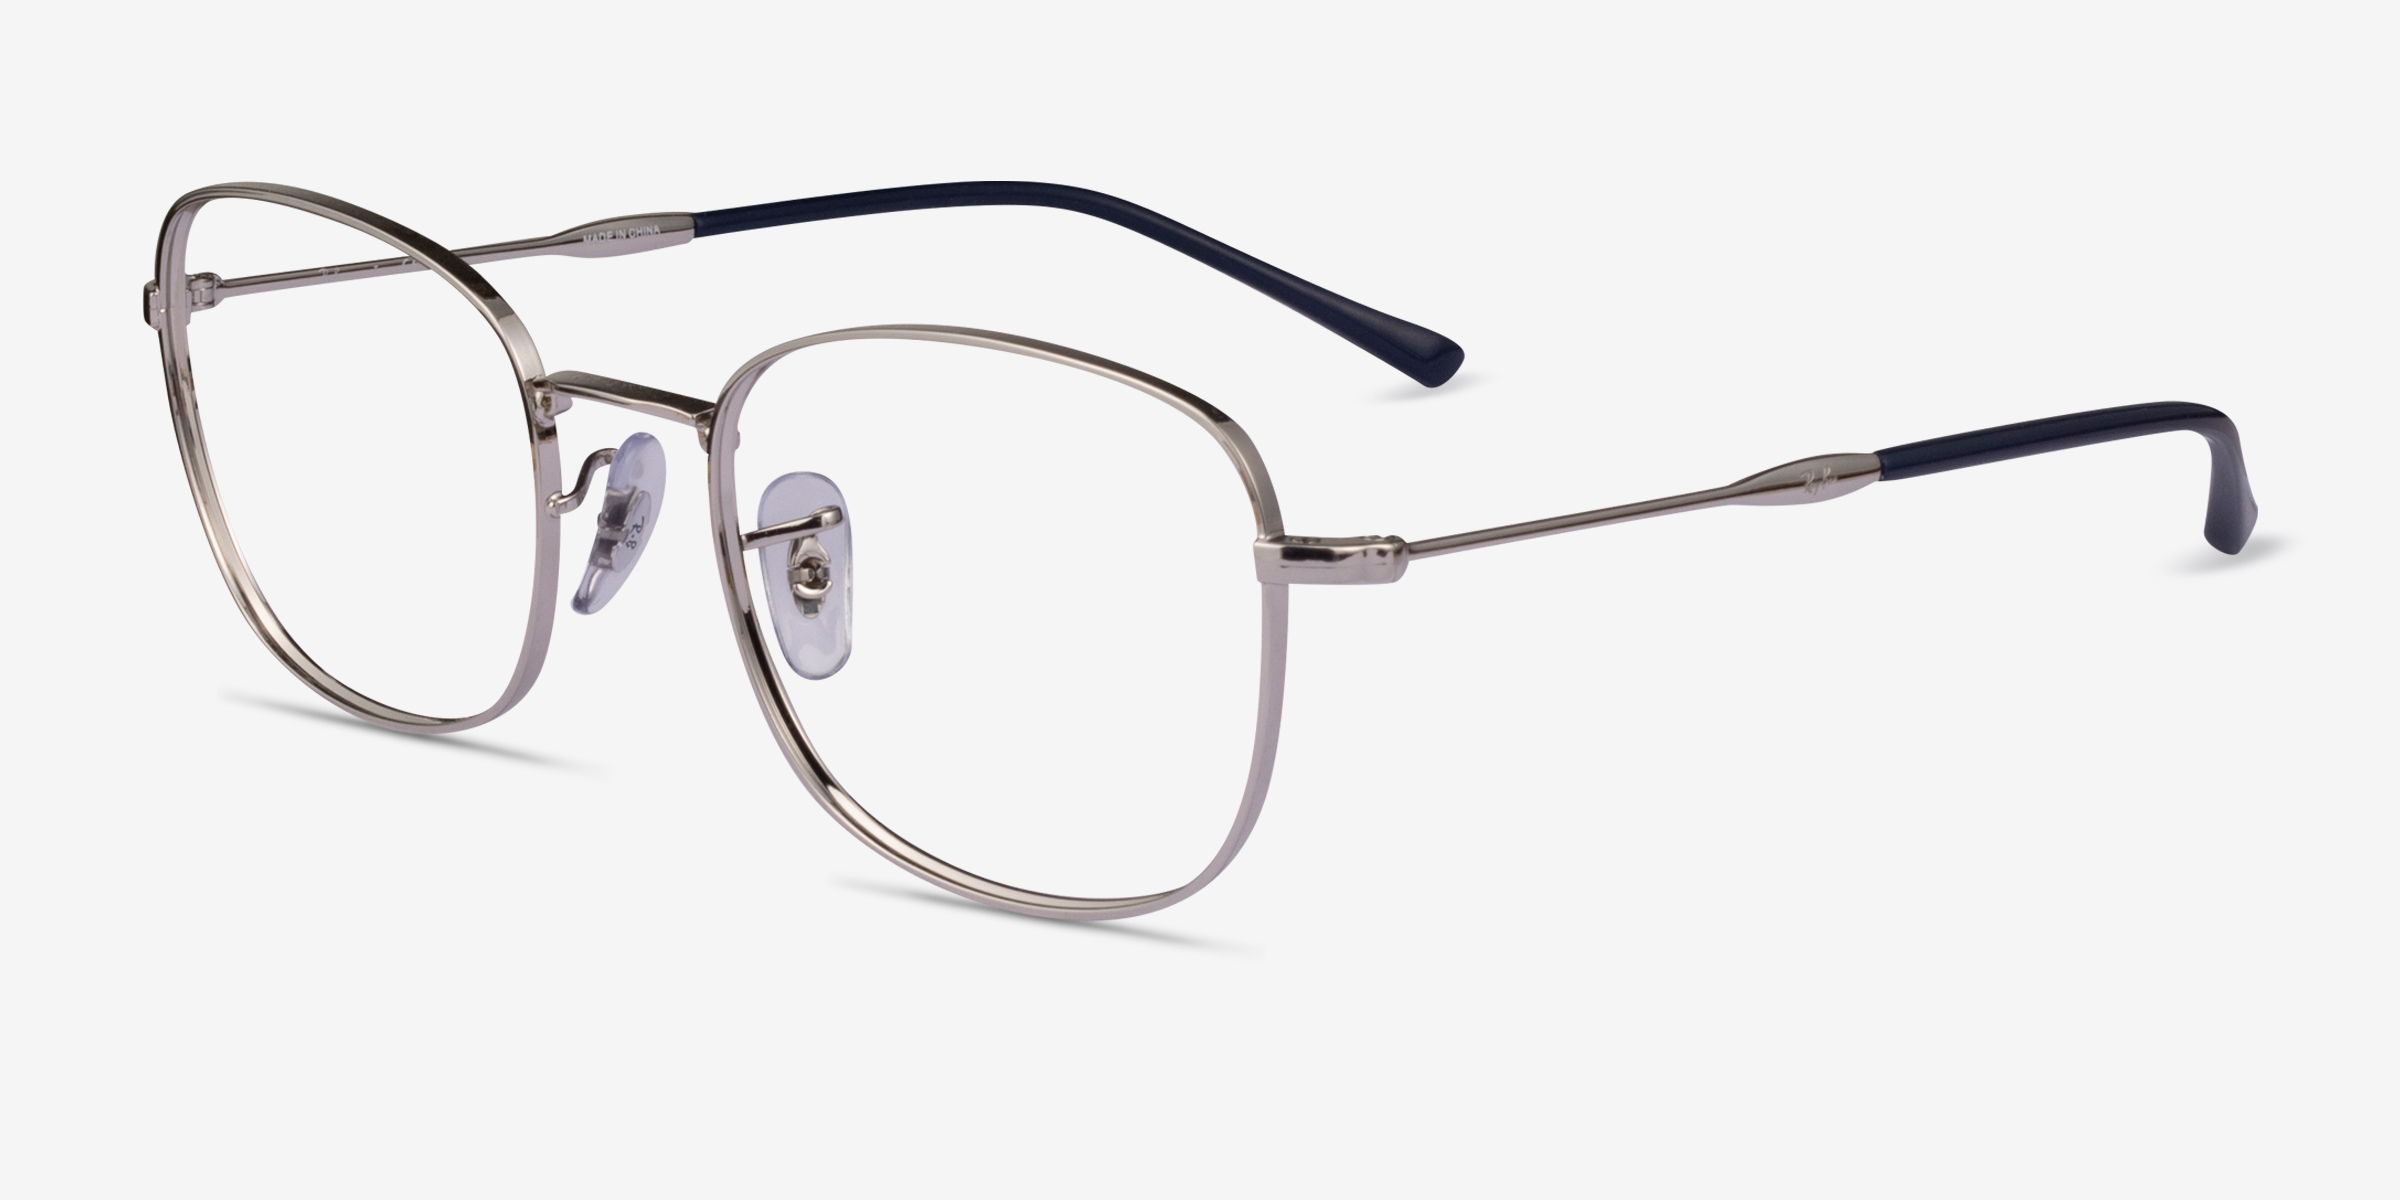 Ray-Ban RB6497 - Oval Silver Frame Eyeglasses | Eyebuydirect Canada